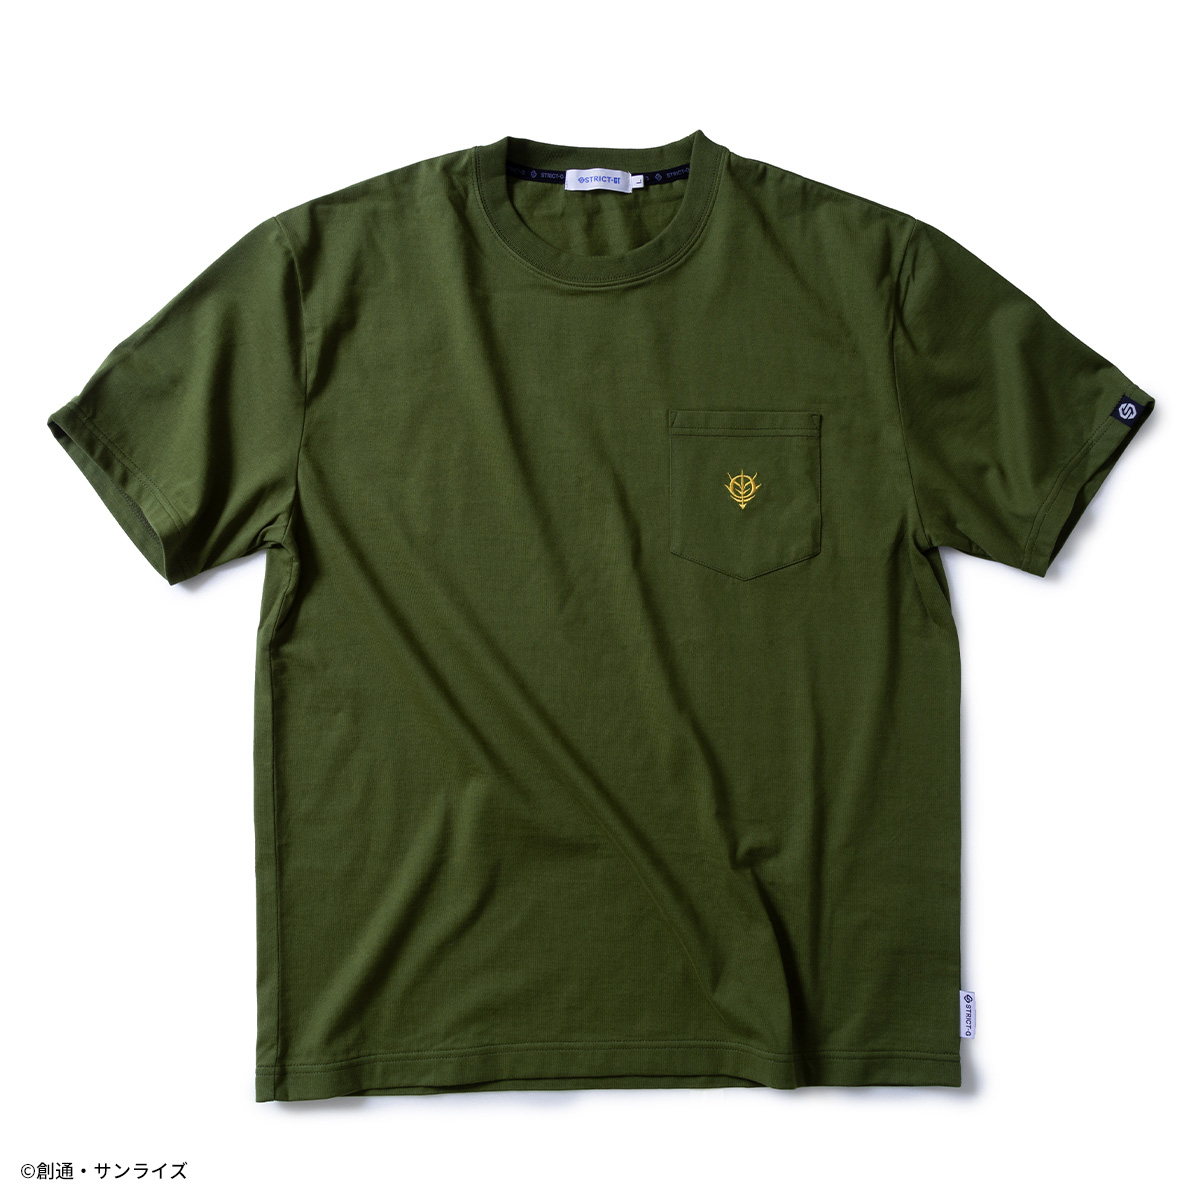 STRICT-G『機動戦士ガンダム』ポケット付き半袖Tシャツ ZEON FORCES